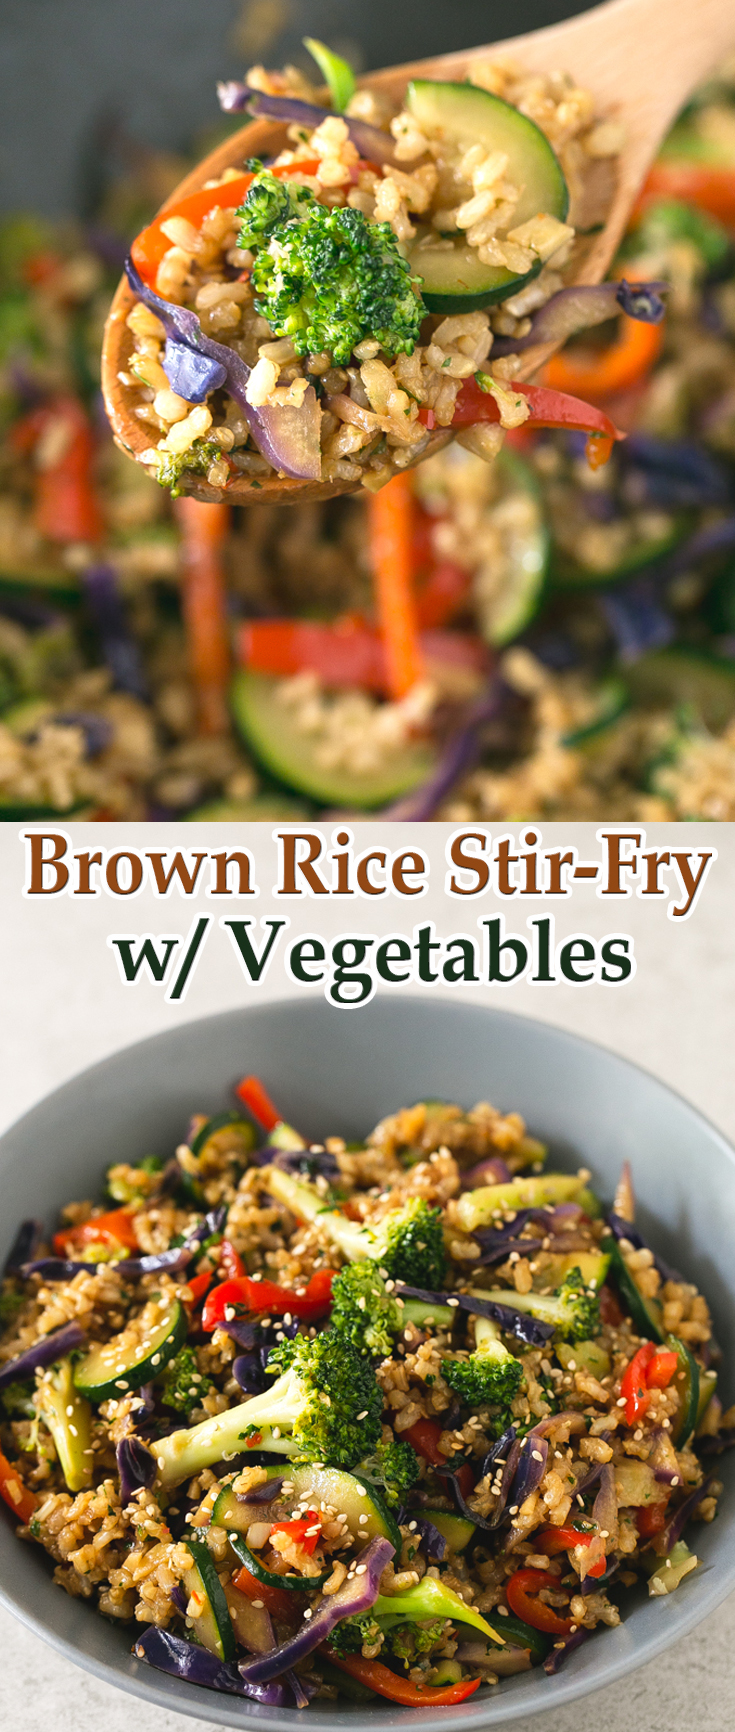 Brown Rice Stir-Fry with Vegetables